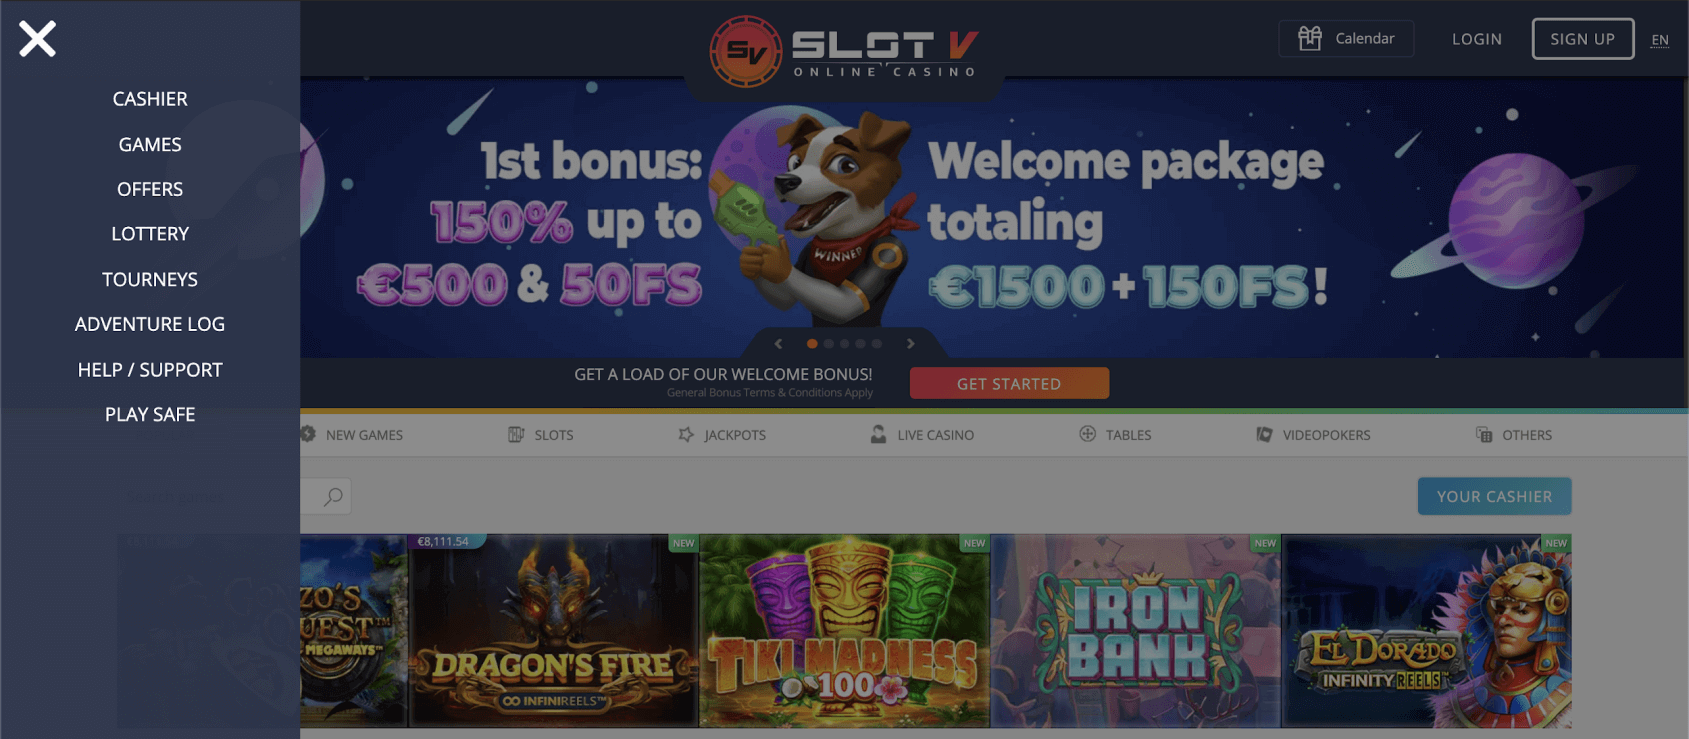 Review of SlotV Casino